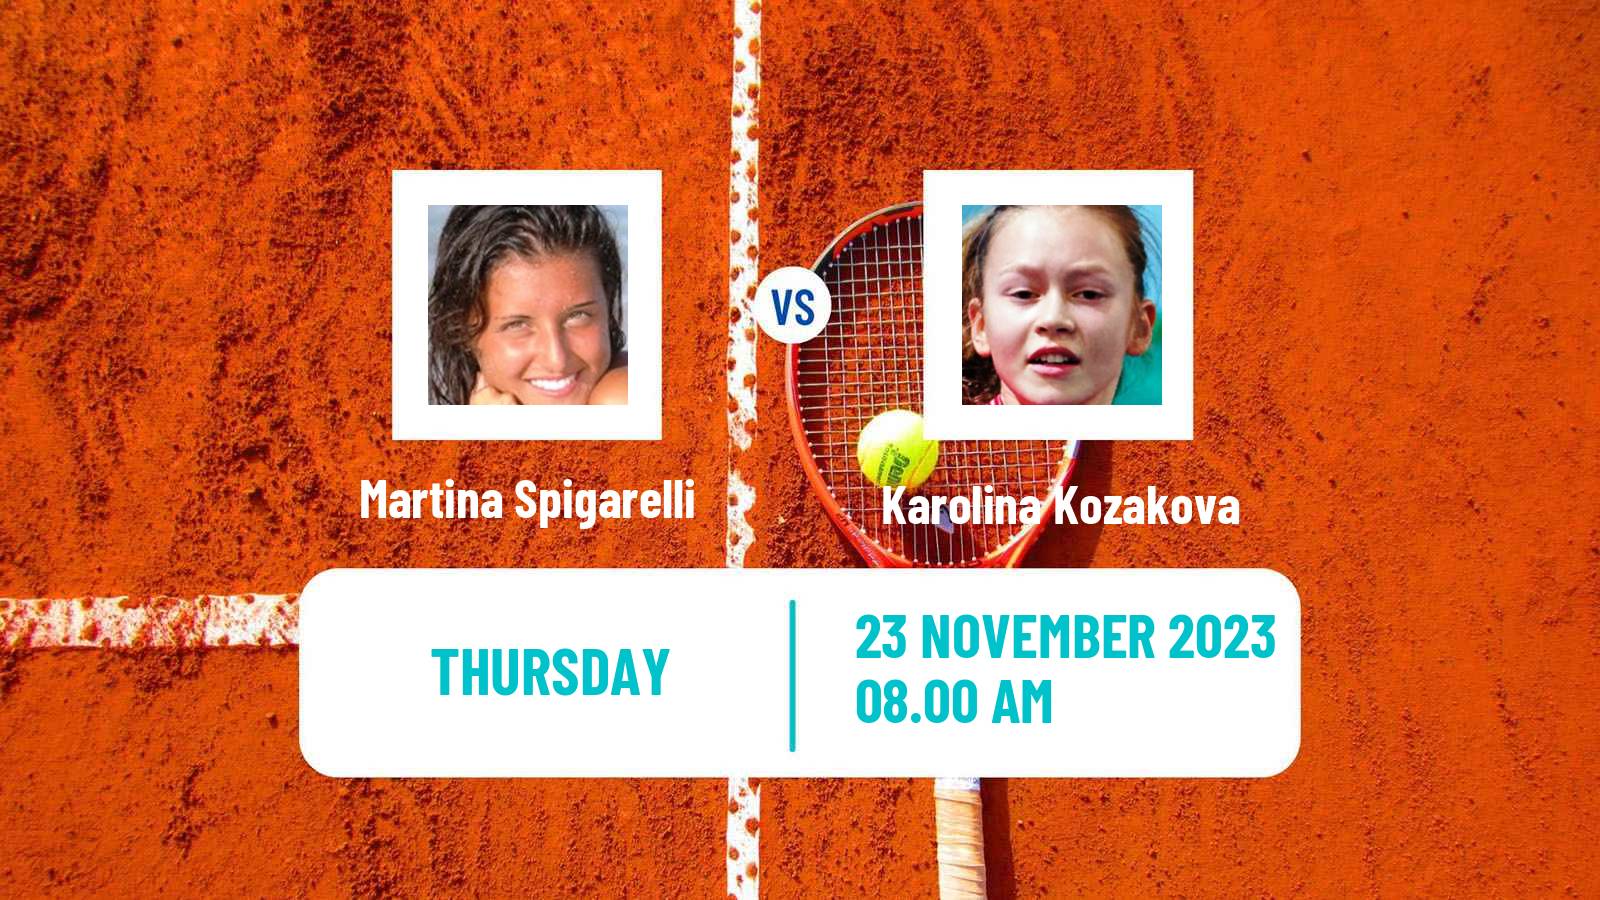 Tennis ITF W15 Monastir 41 Women Martina Spigarelli - Karolina Kozakova